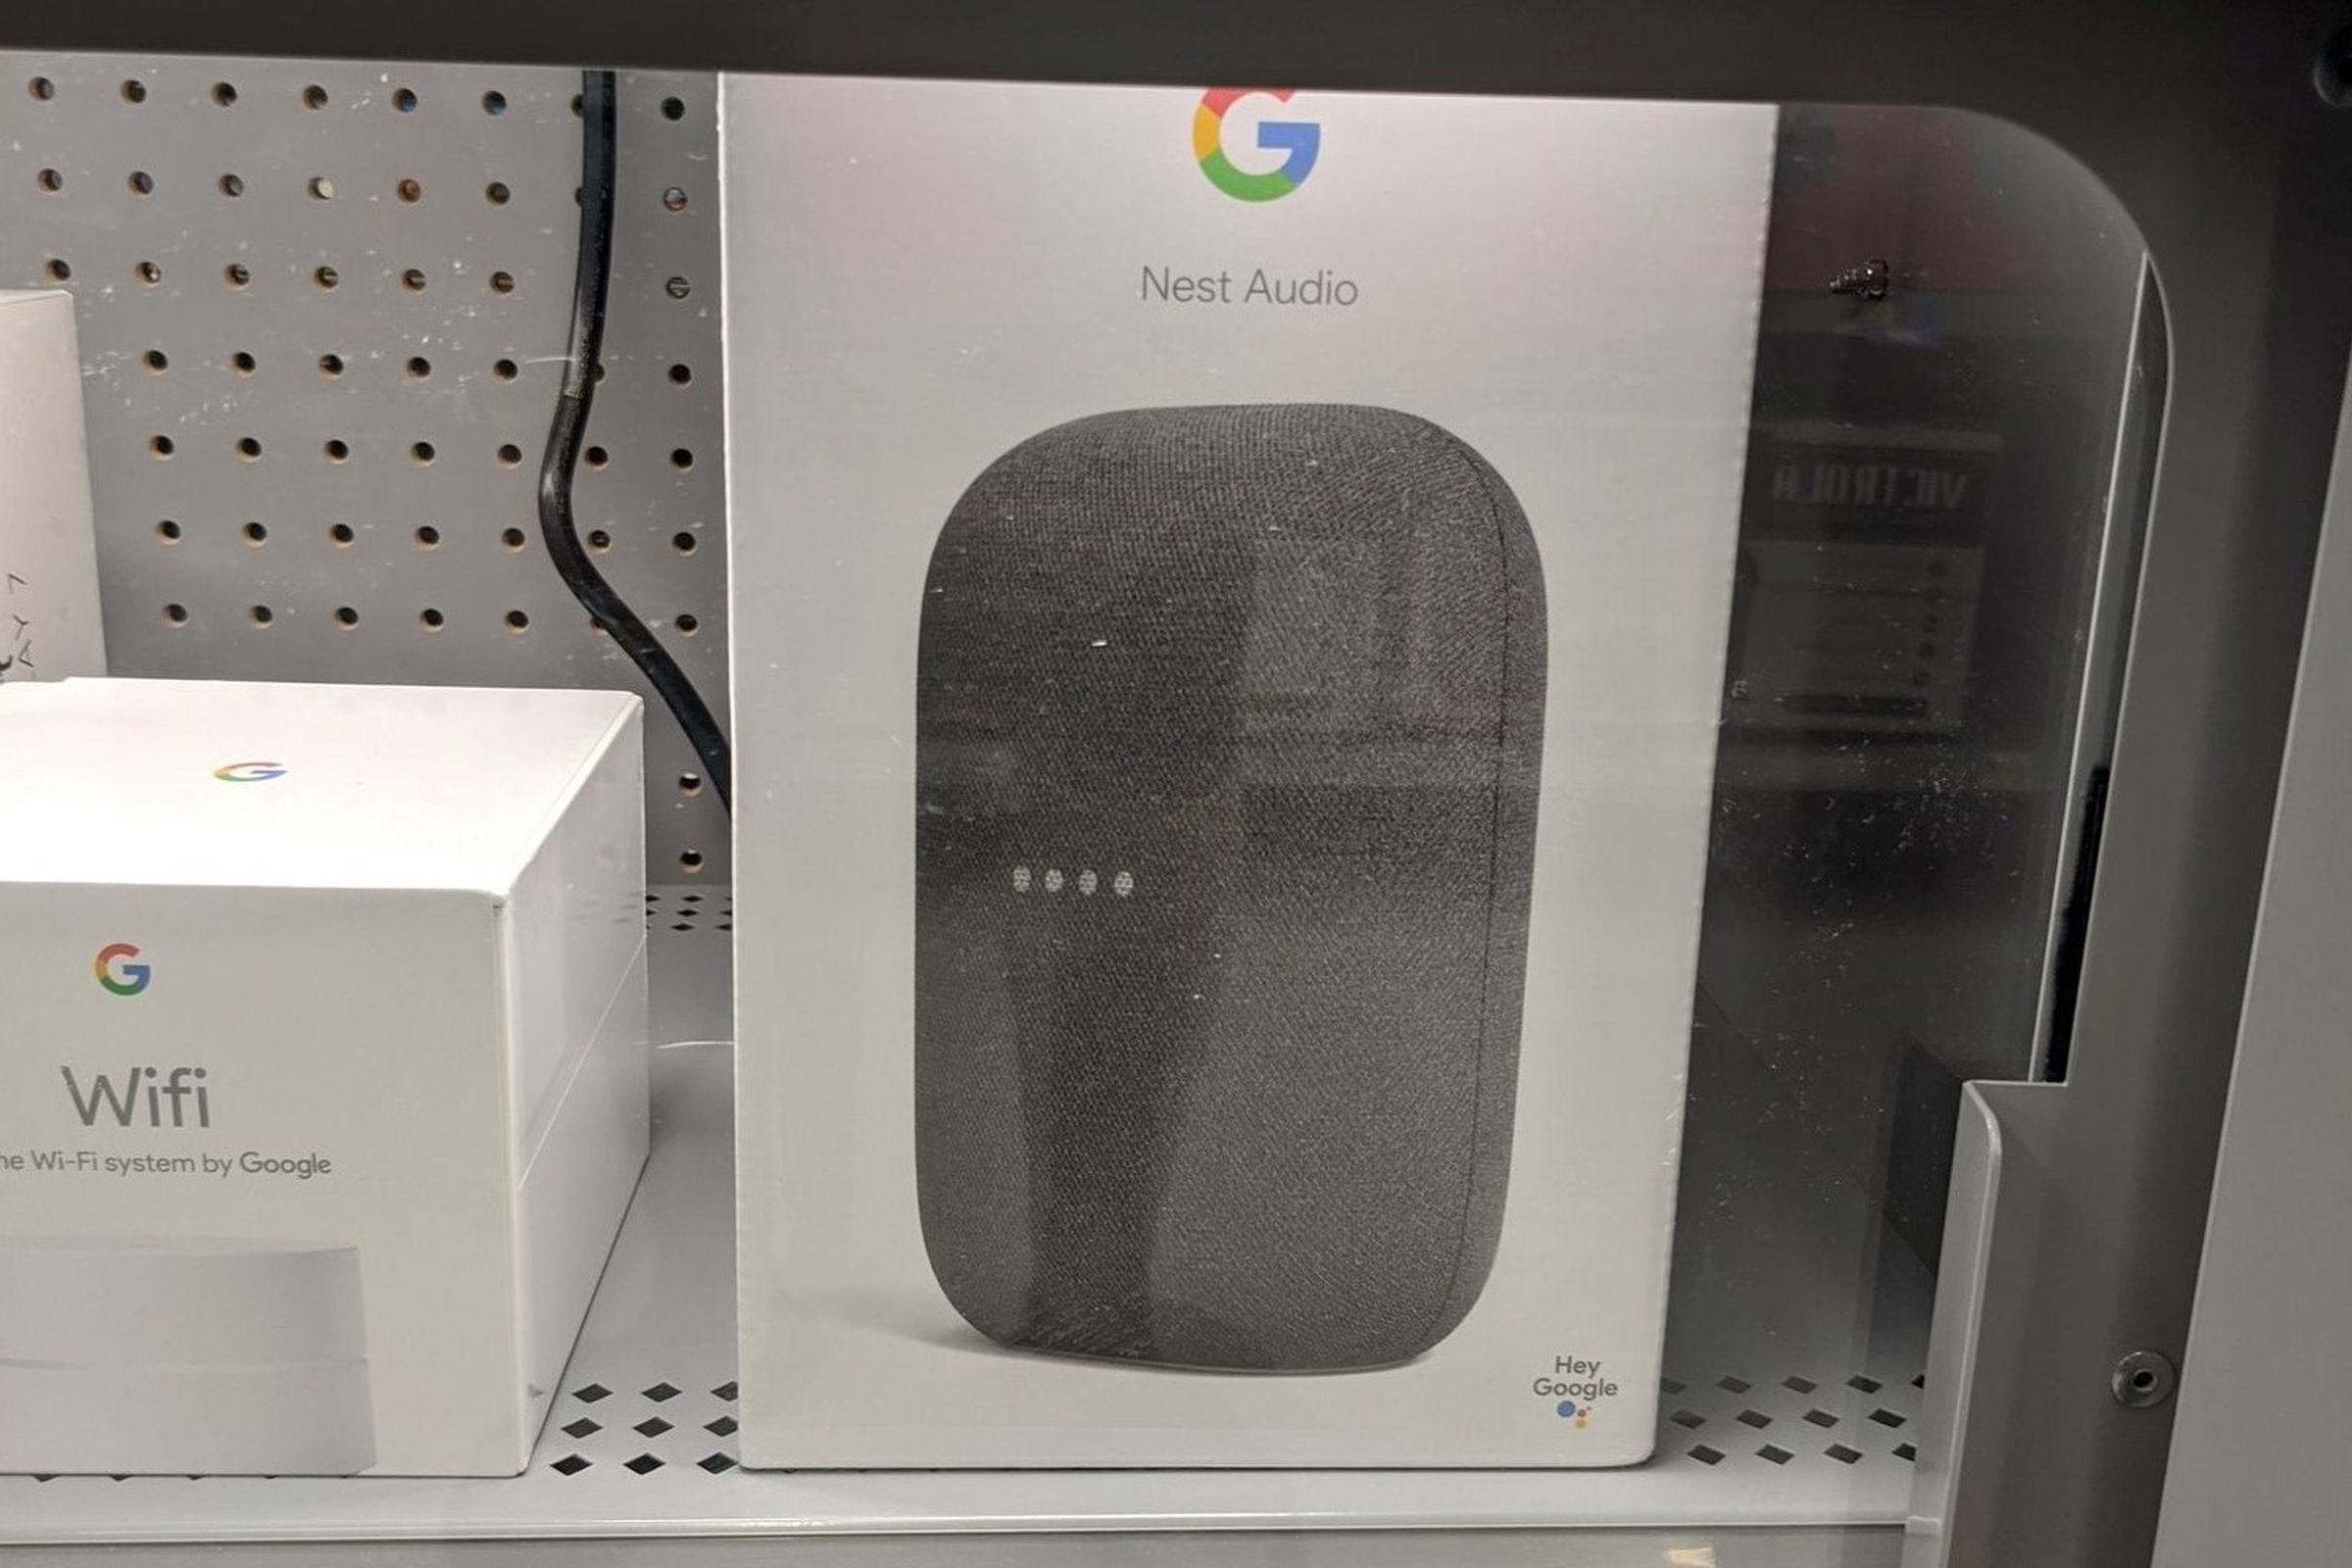 Walmart already has Google’s new smart speaker visible on its shelves.